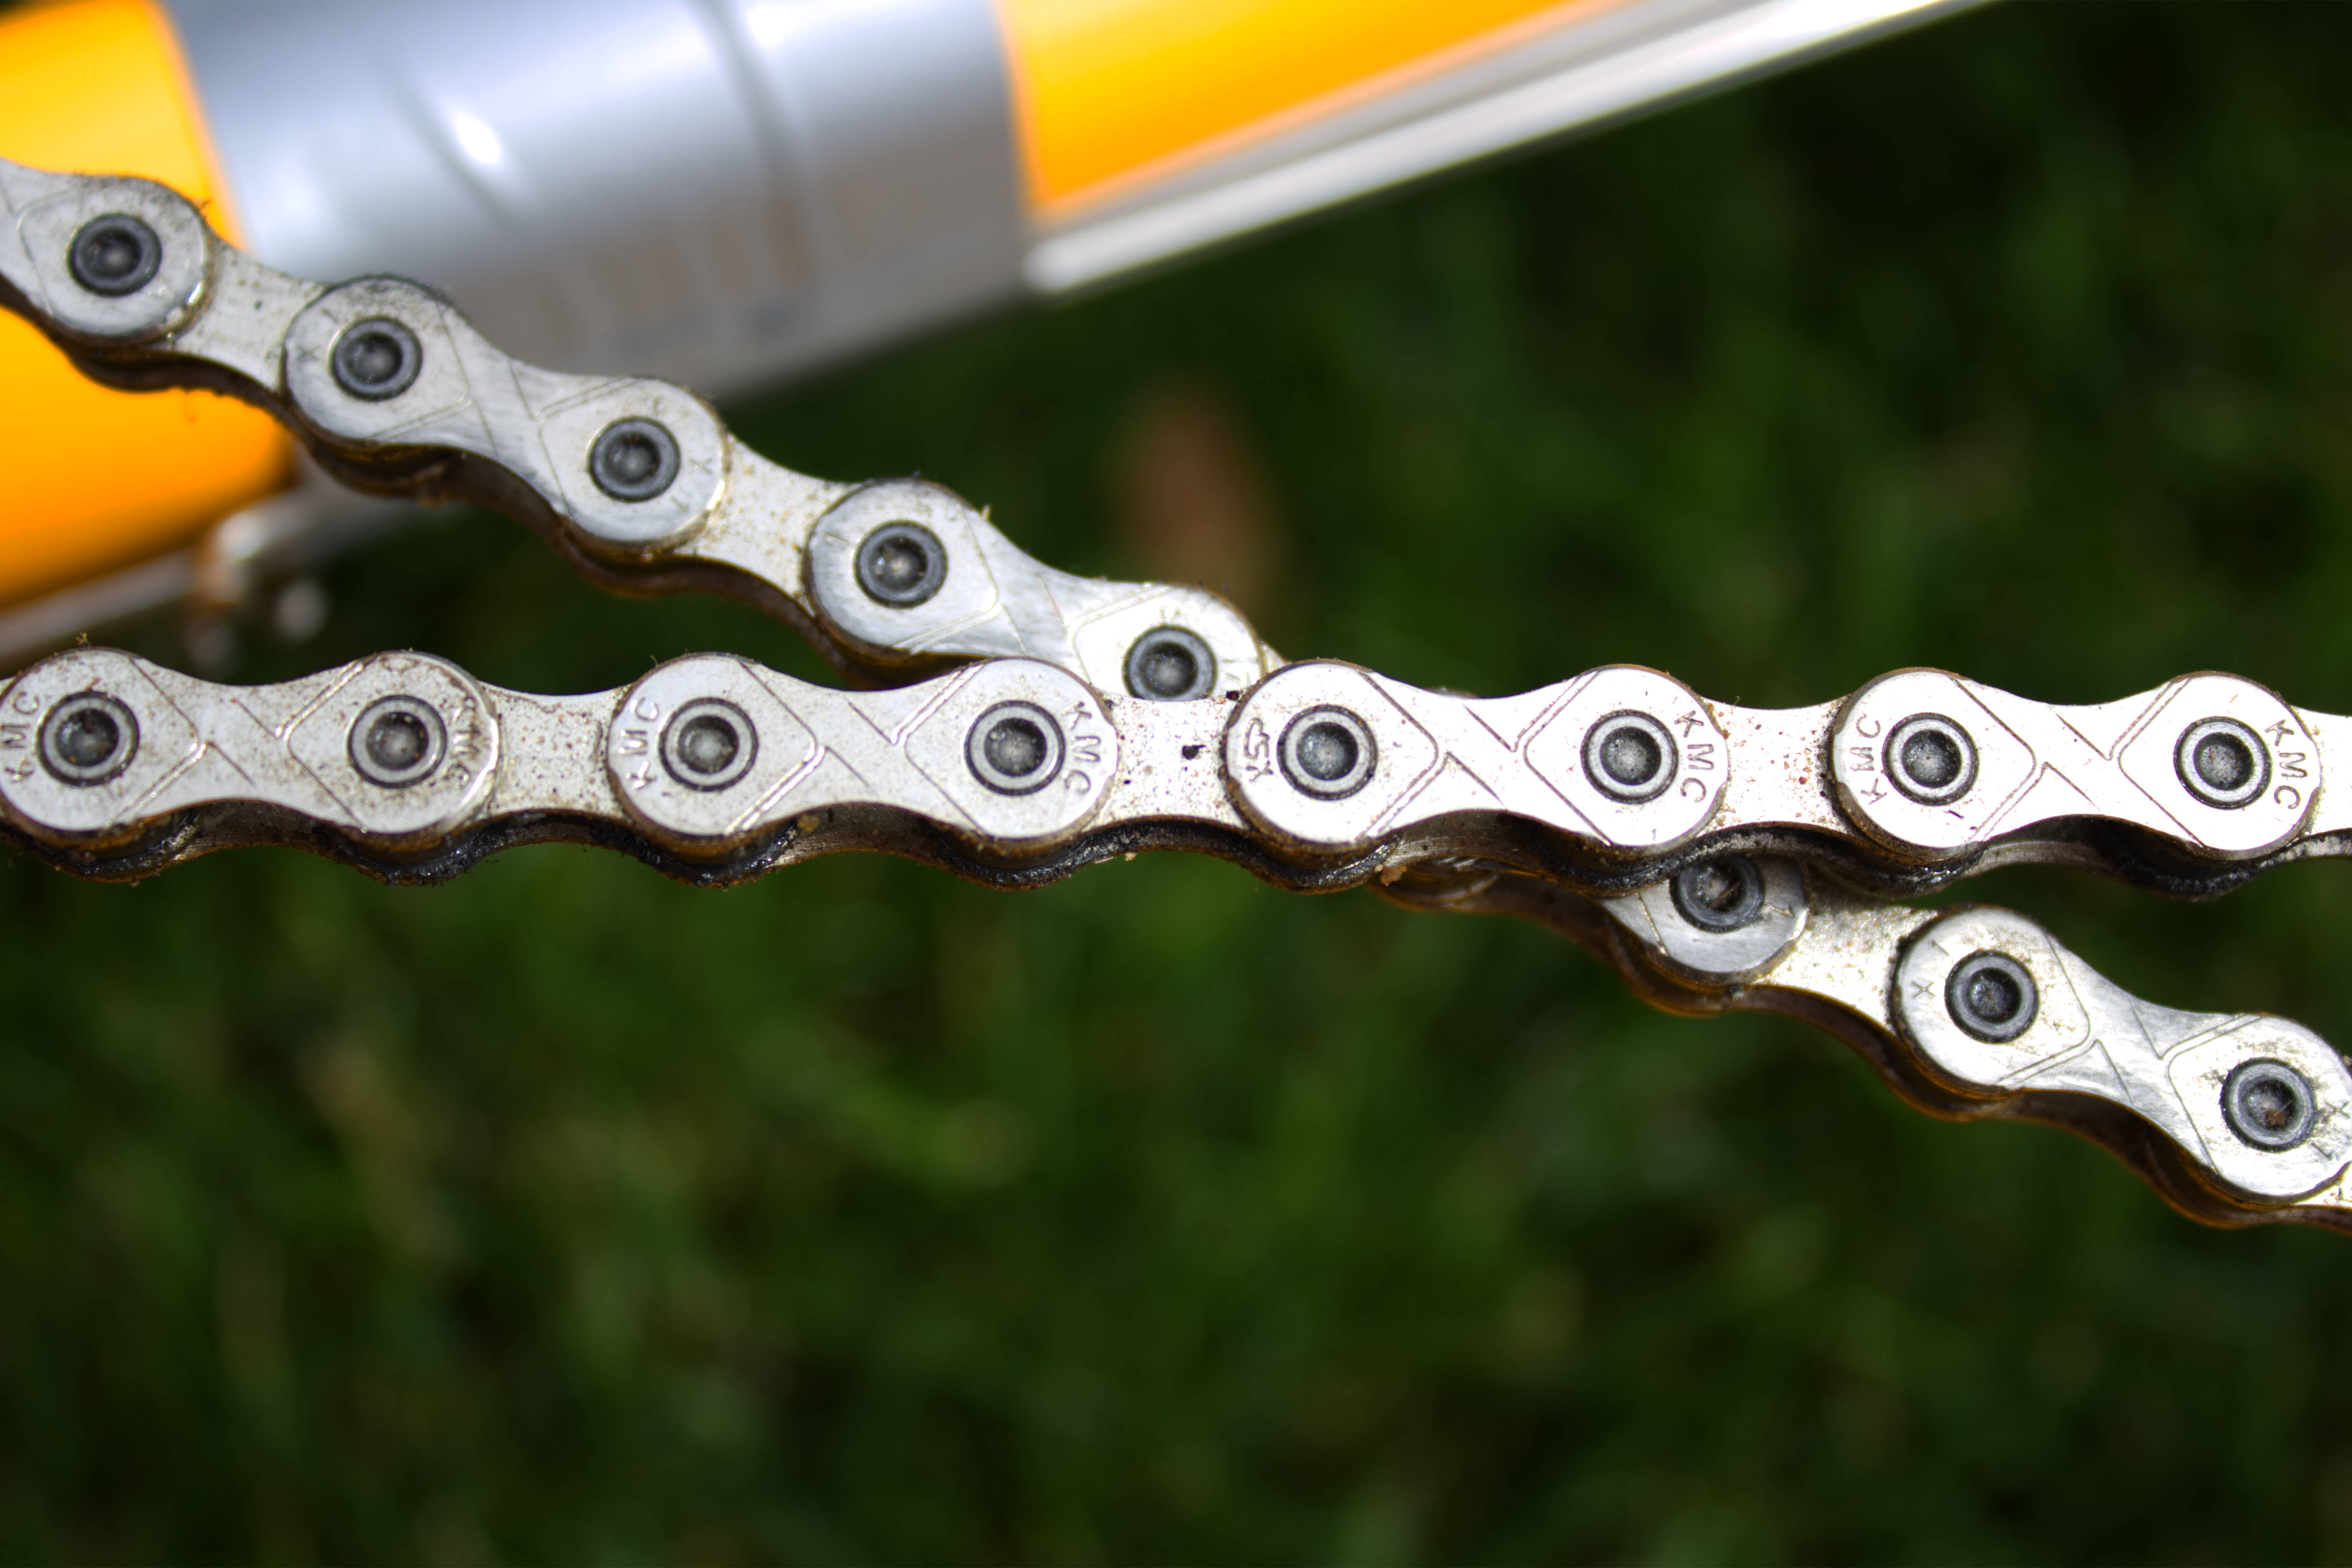 Close-up of a bike chain.